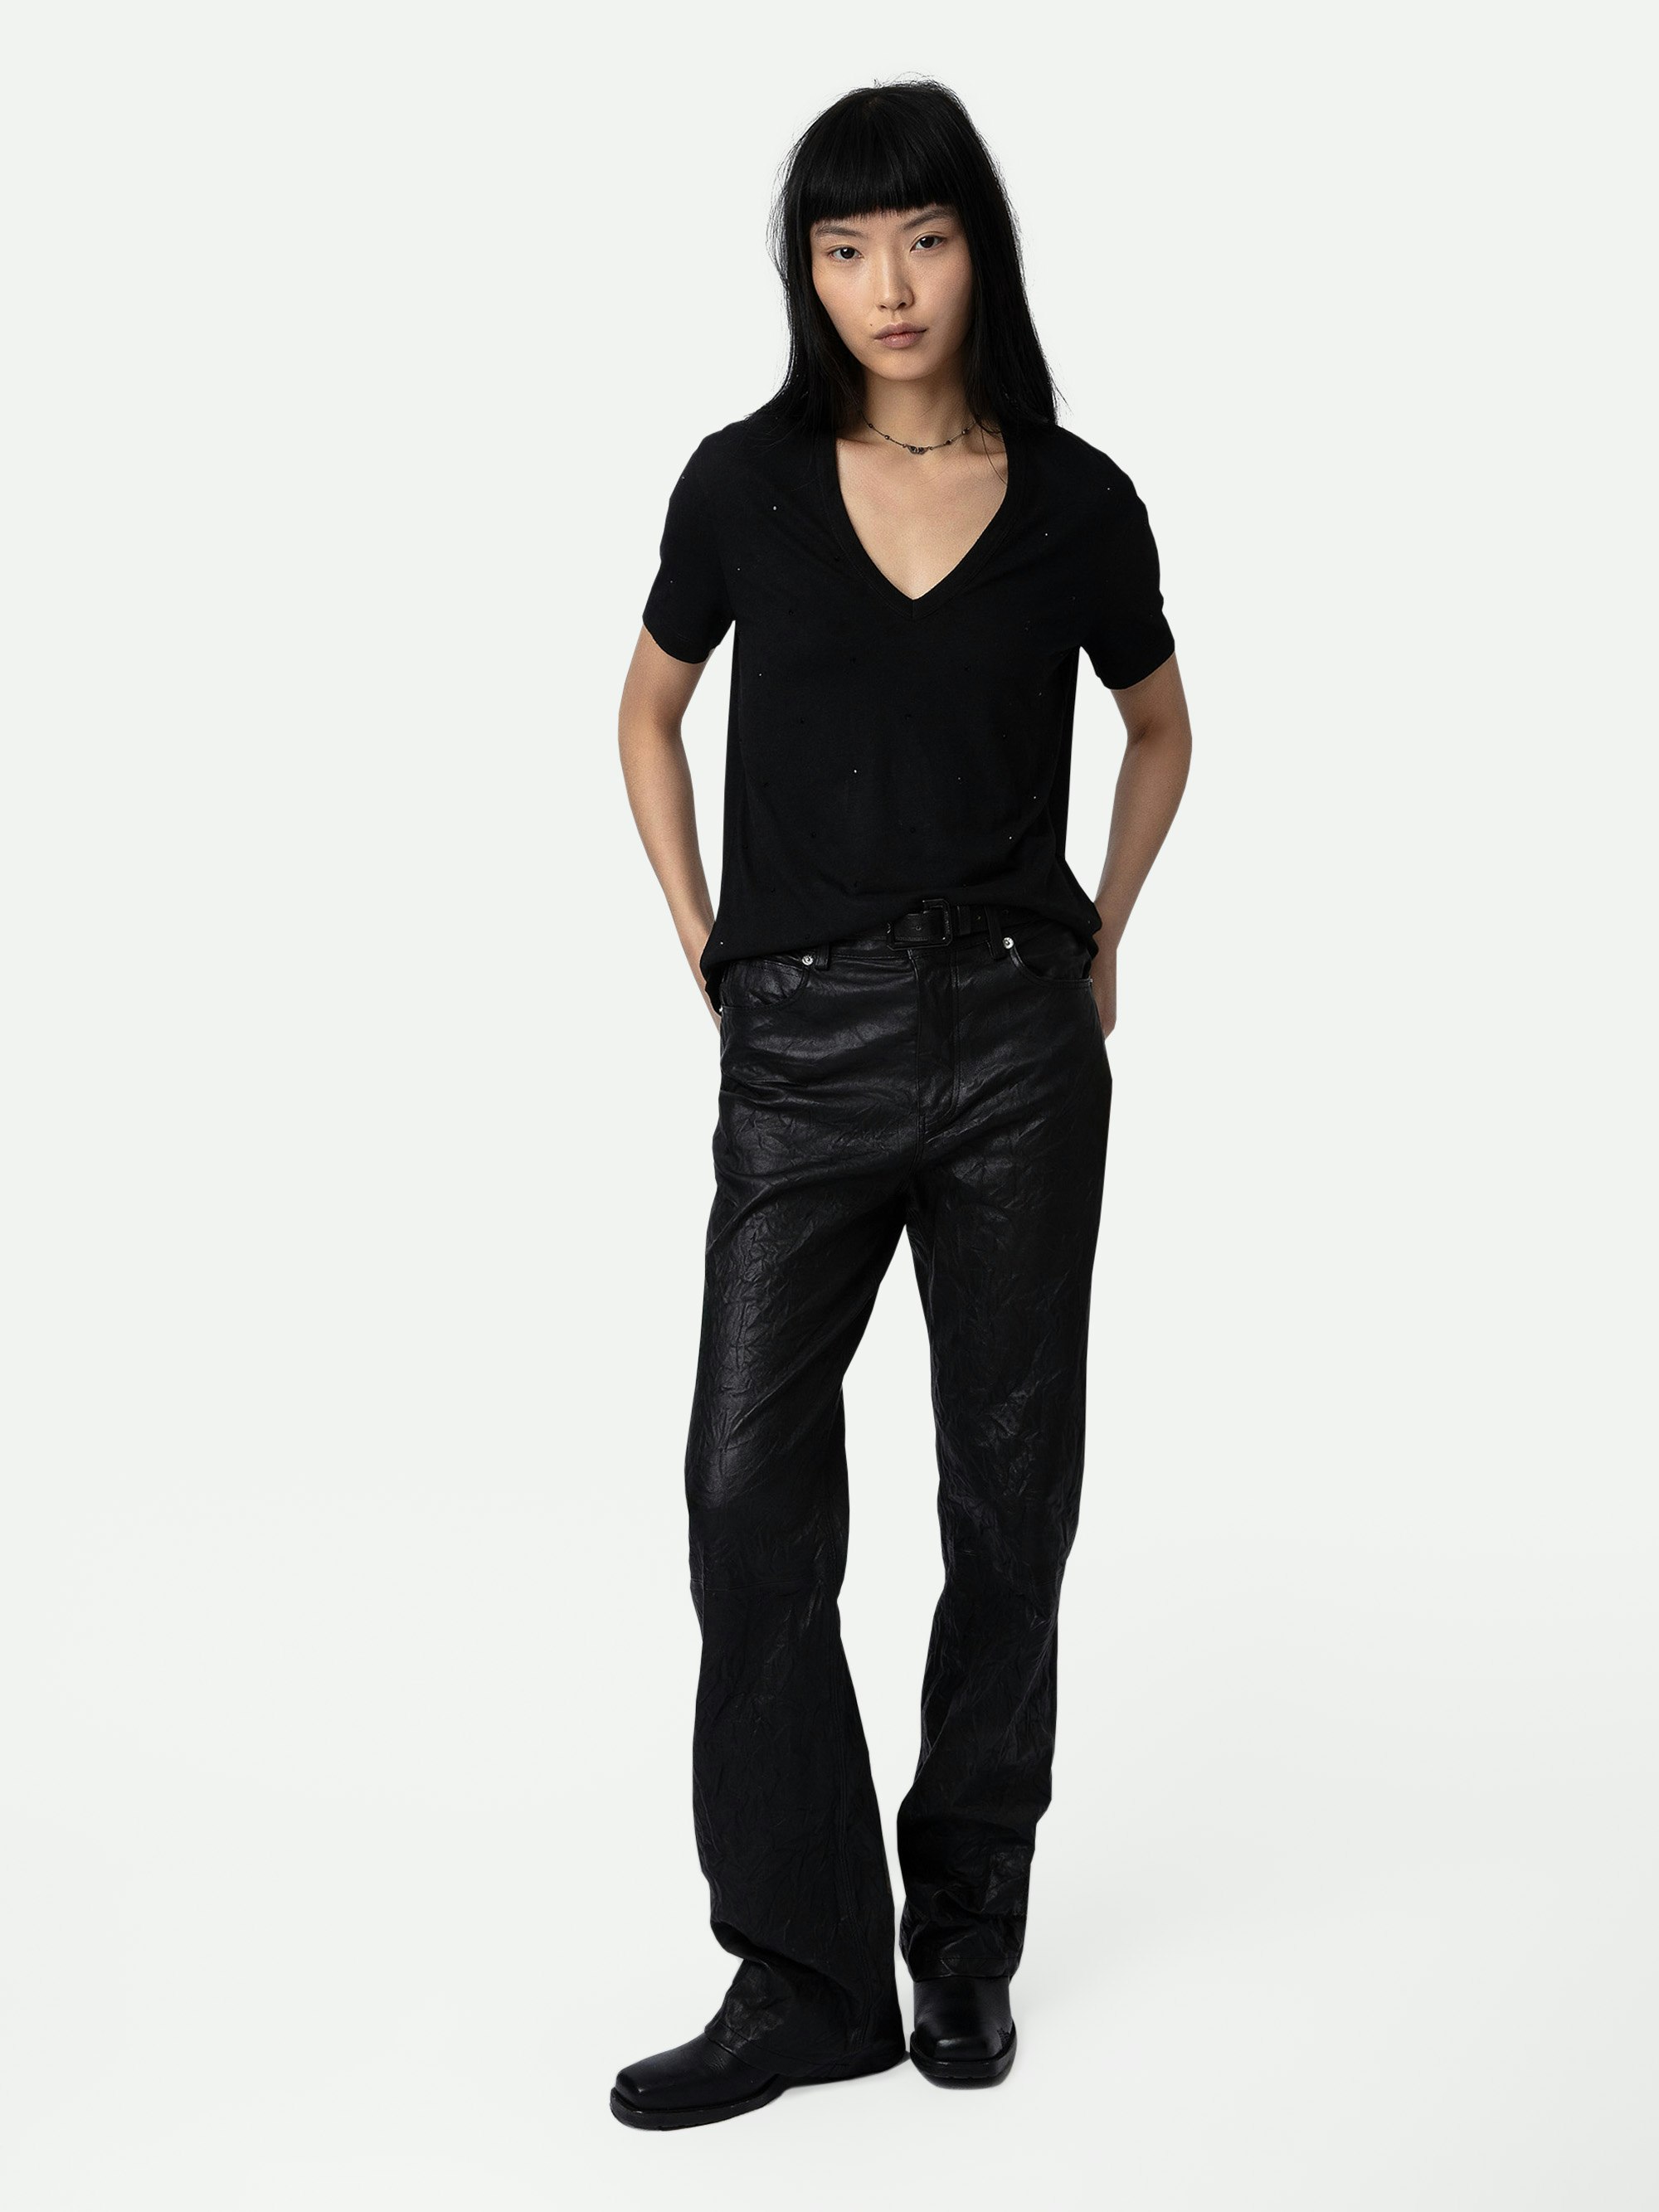 Camiseta Wassa Strass - Camiseta negra con cuello en V, mangas cortas y strass.